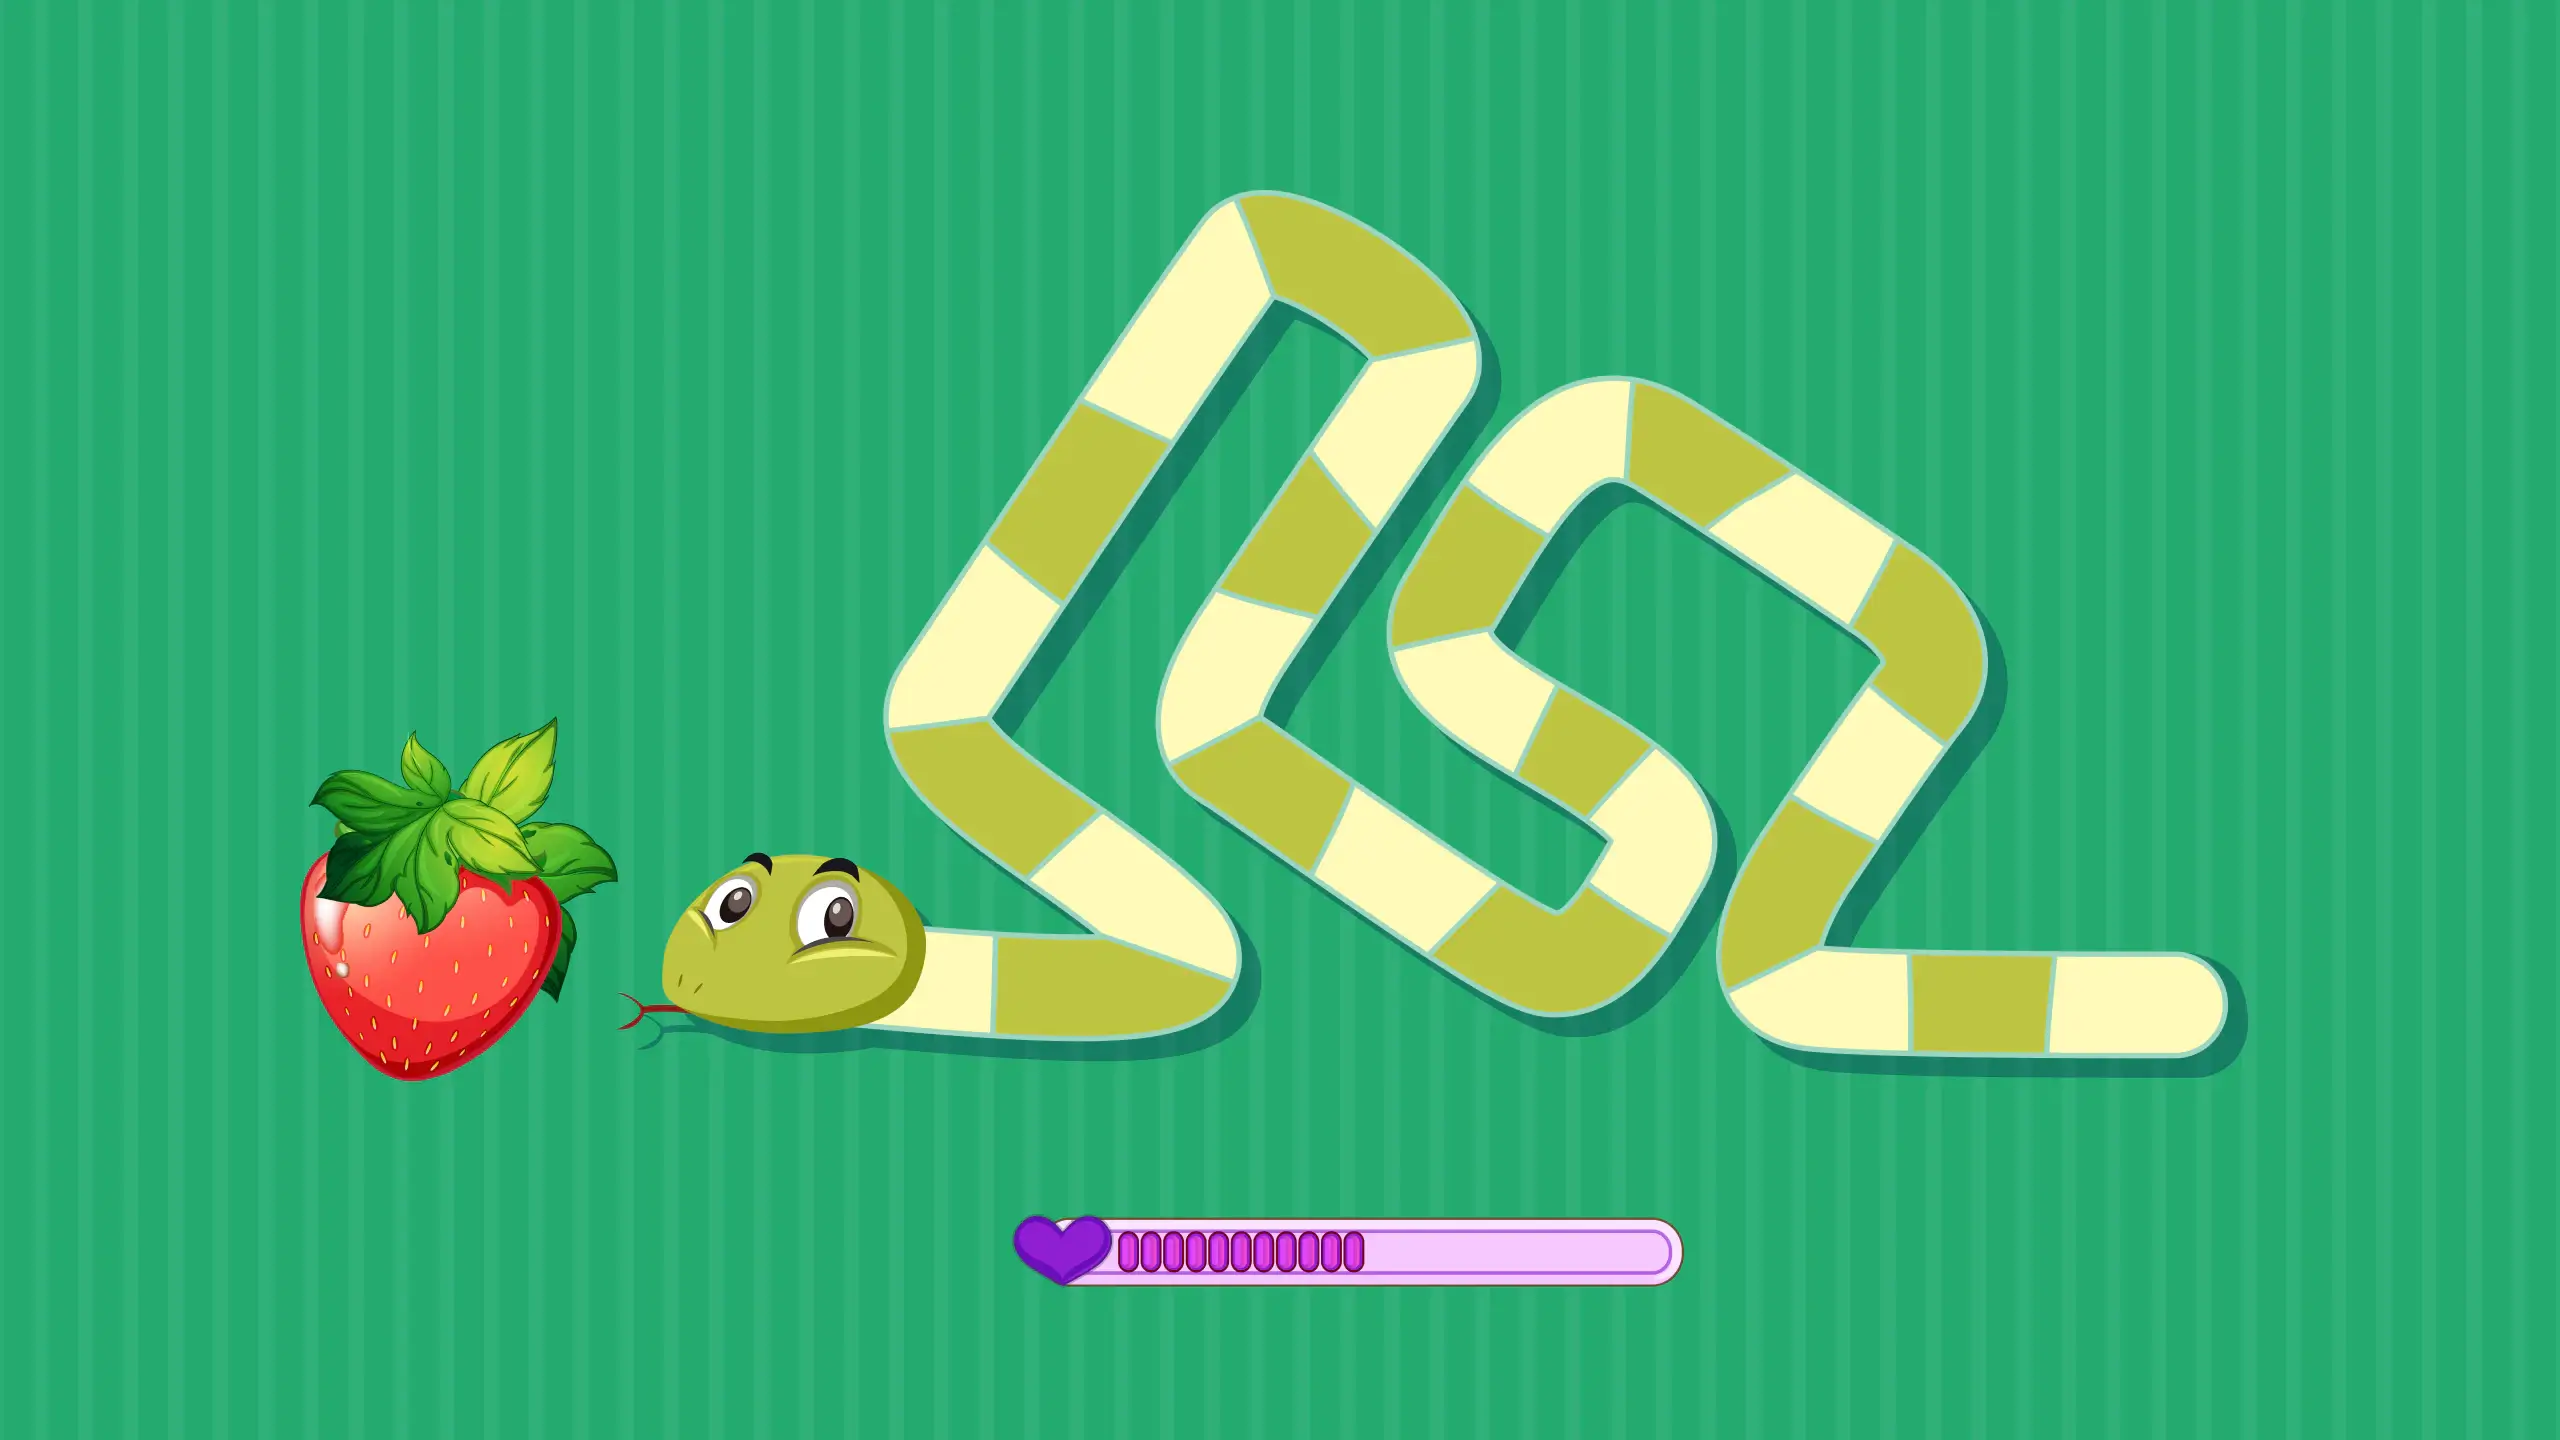 snake game